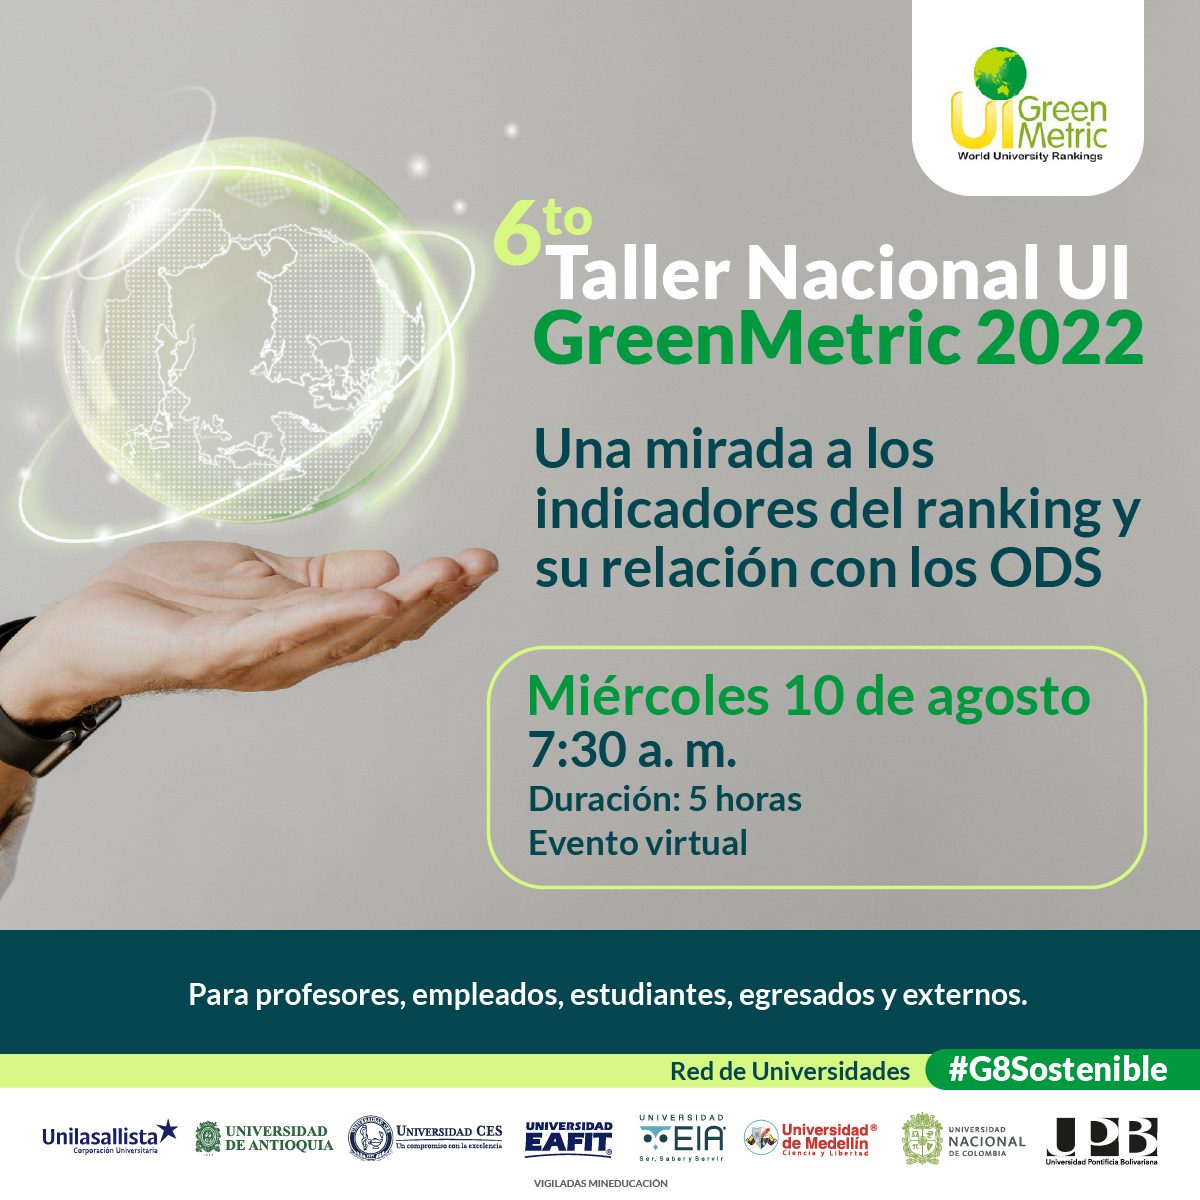 Universidades del G8 invitan a participar en el 6° Taller Nacional UI GreenMetric 2022